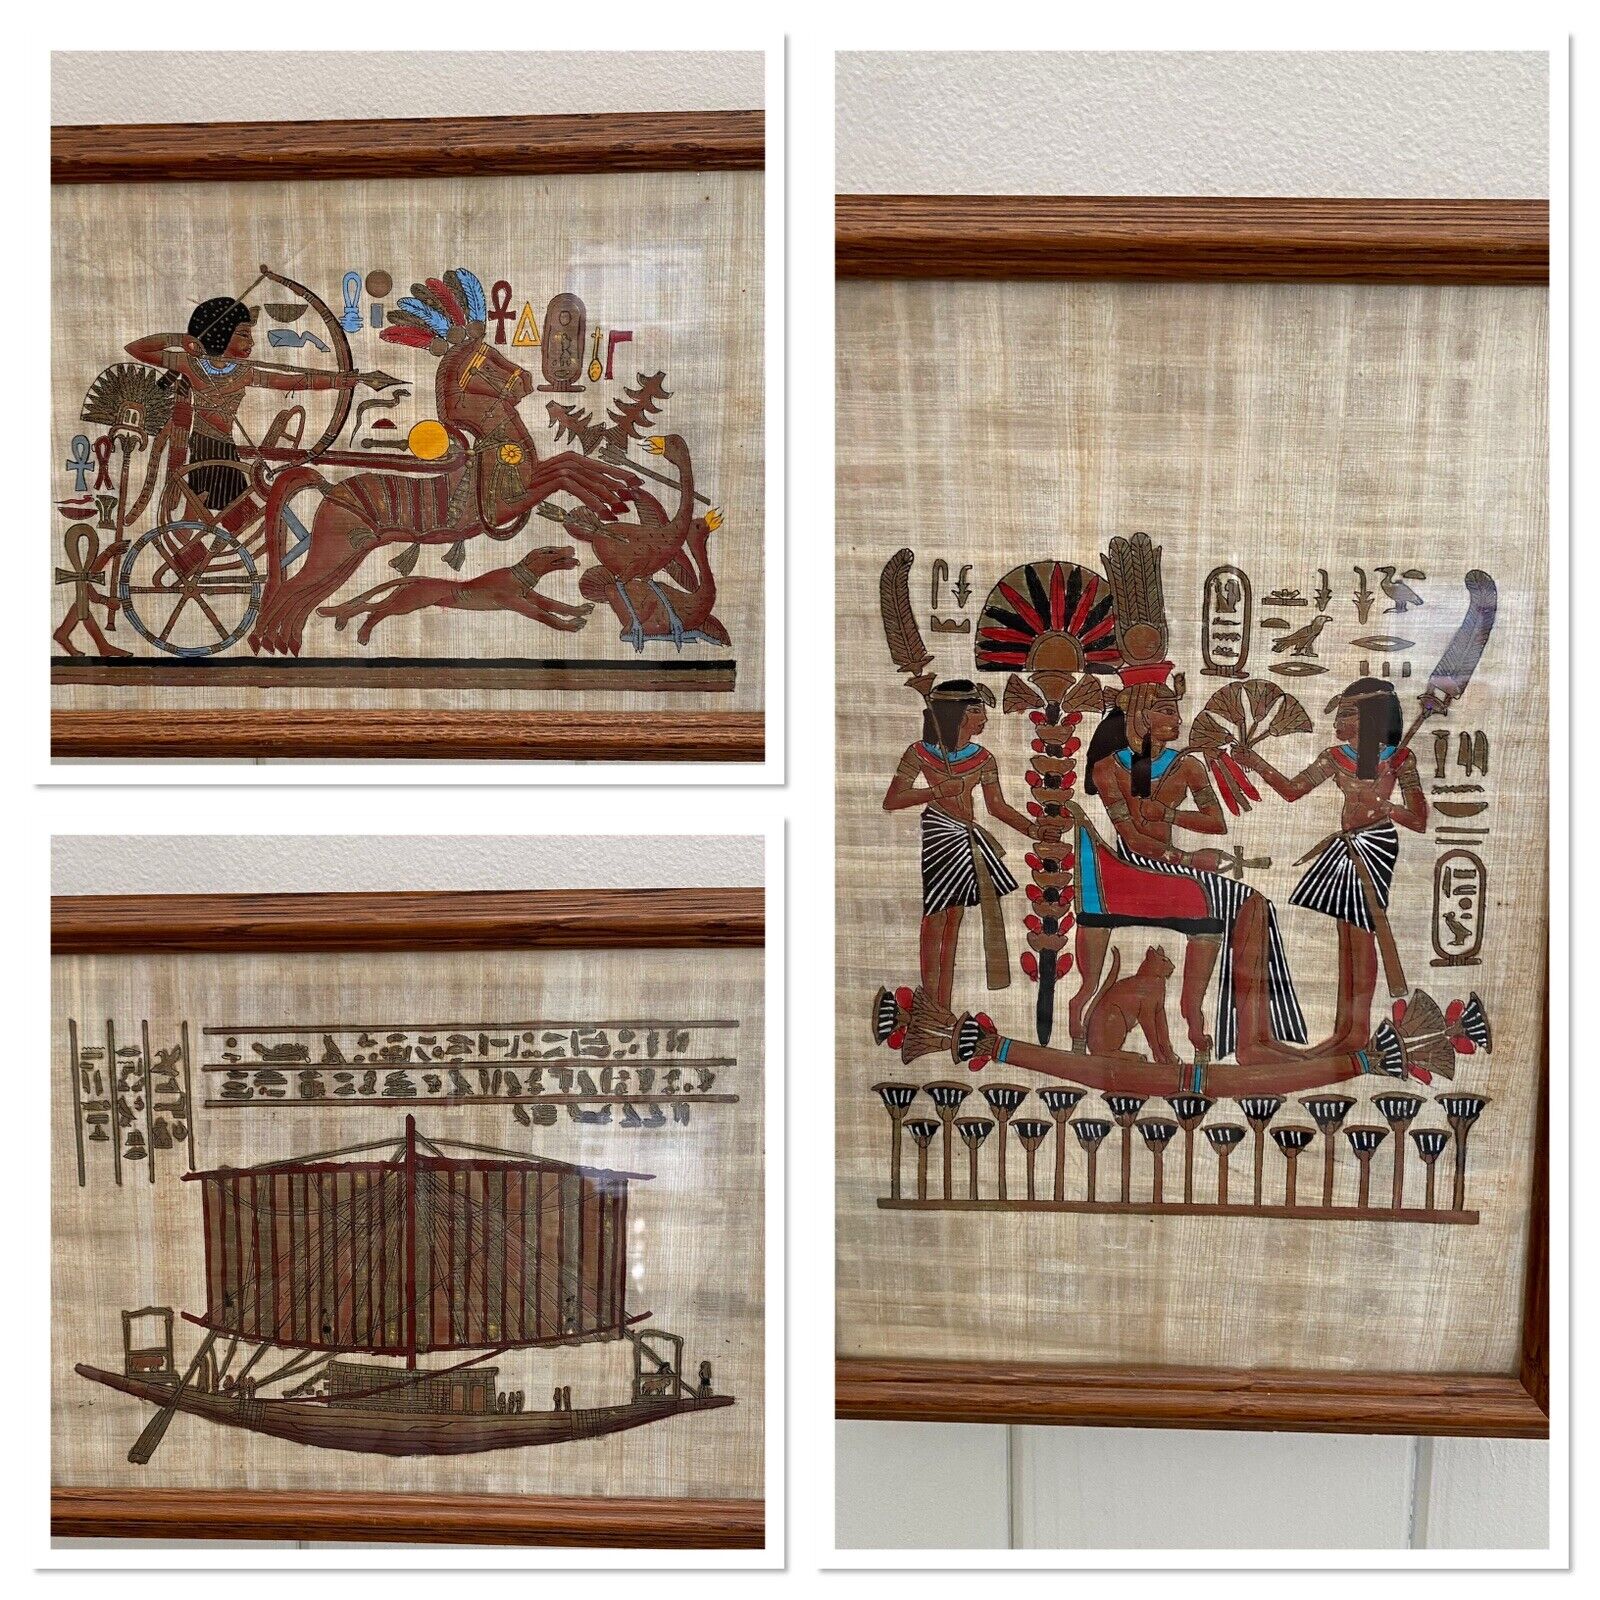 3 ABW EL-HOOL Gallery Nefertiti Gallery Papyrus Painting Framed Vintage Egyptian